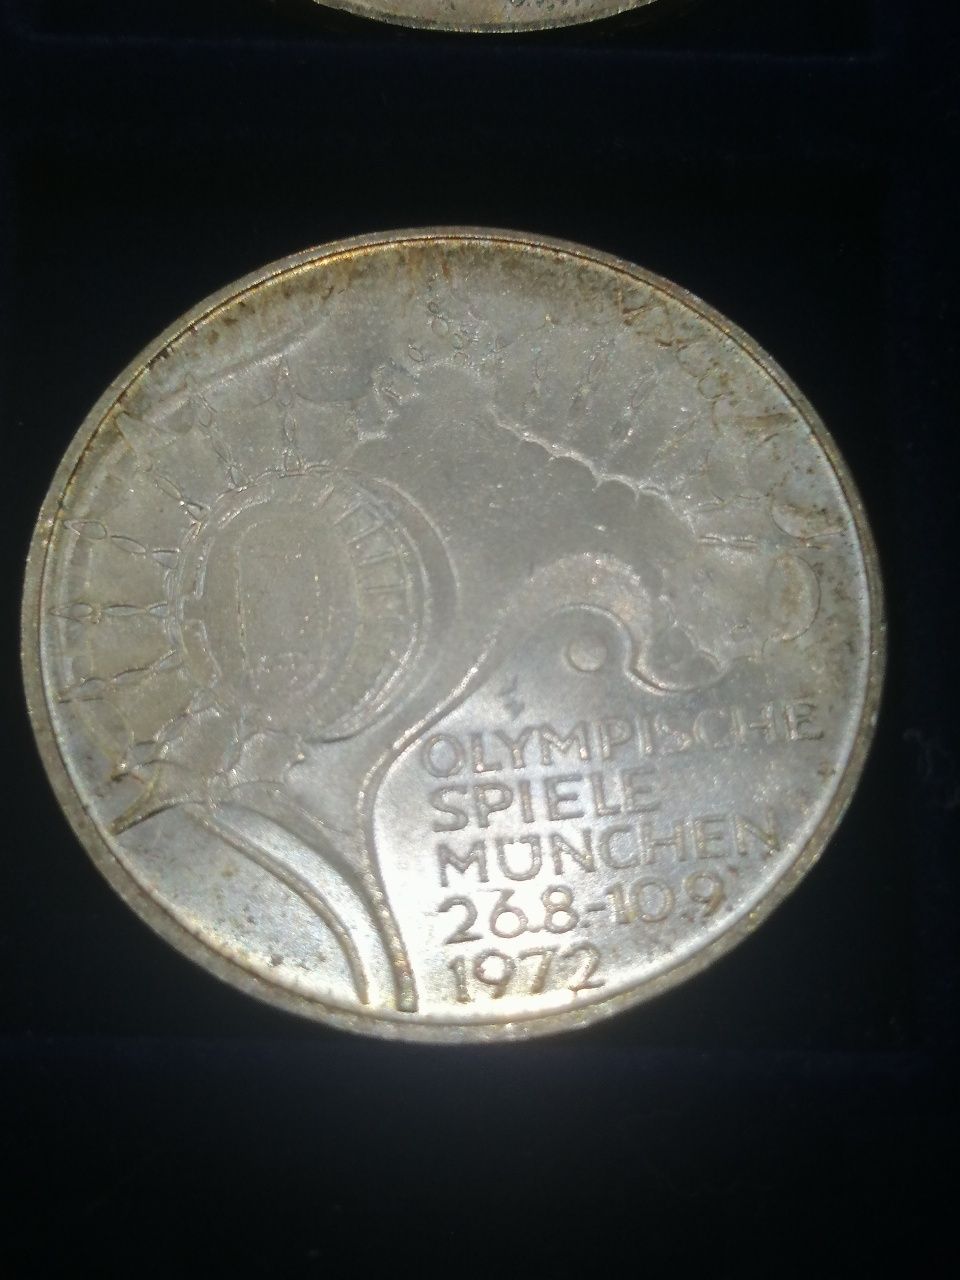 Лот сребърни монети 1972